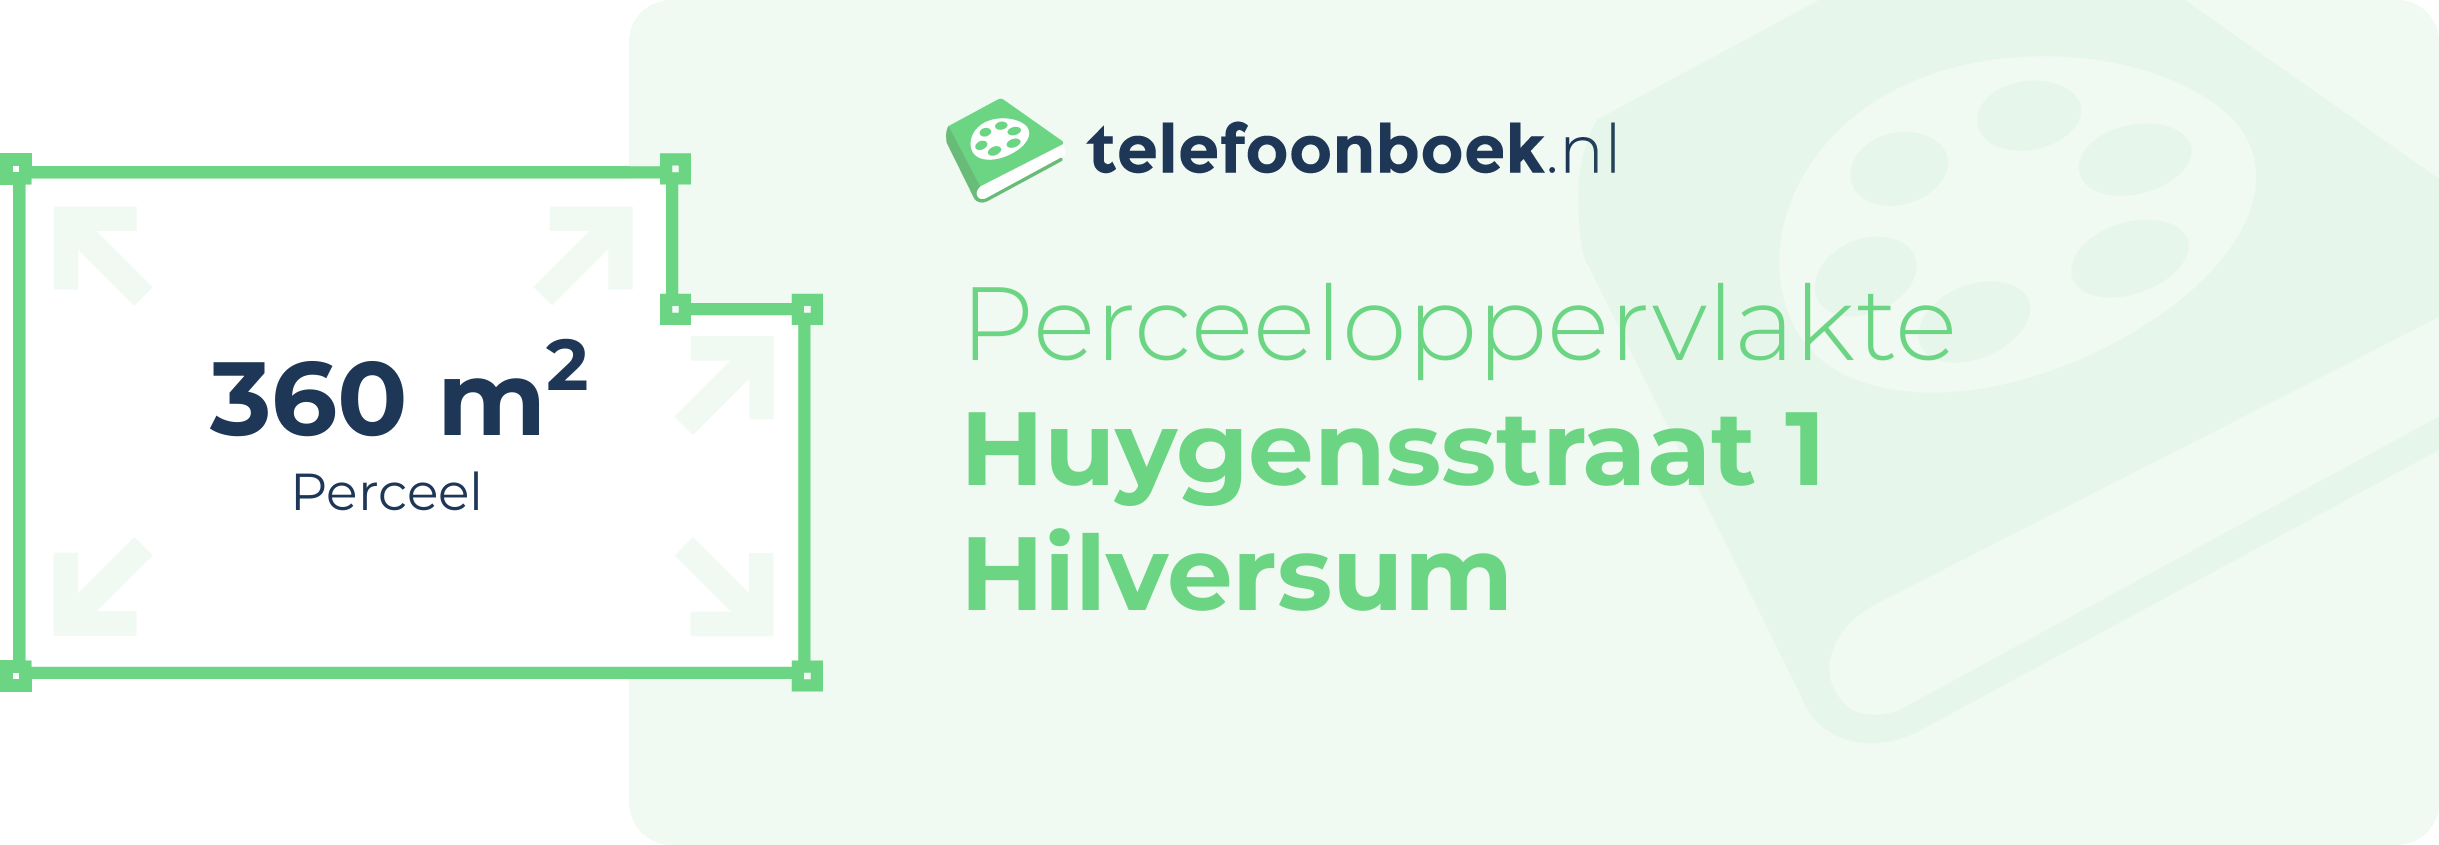 Perceeloppervlakte Huygensstraat 1 Hilversum